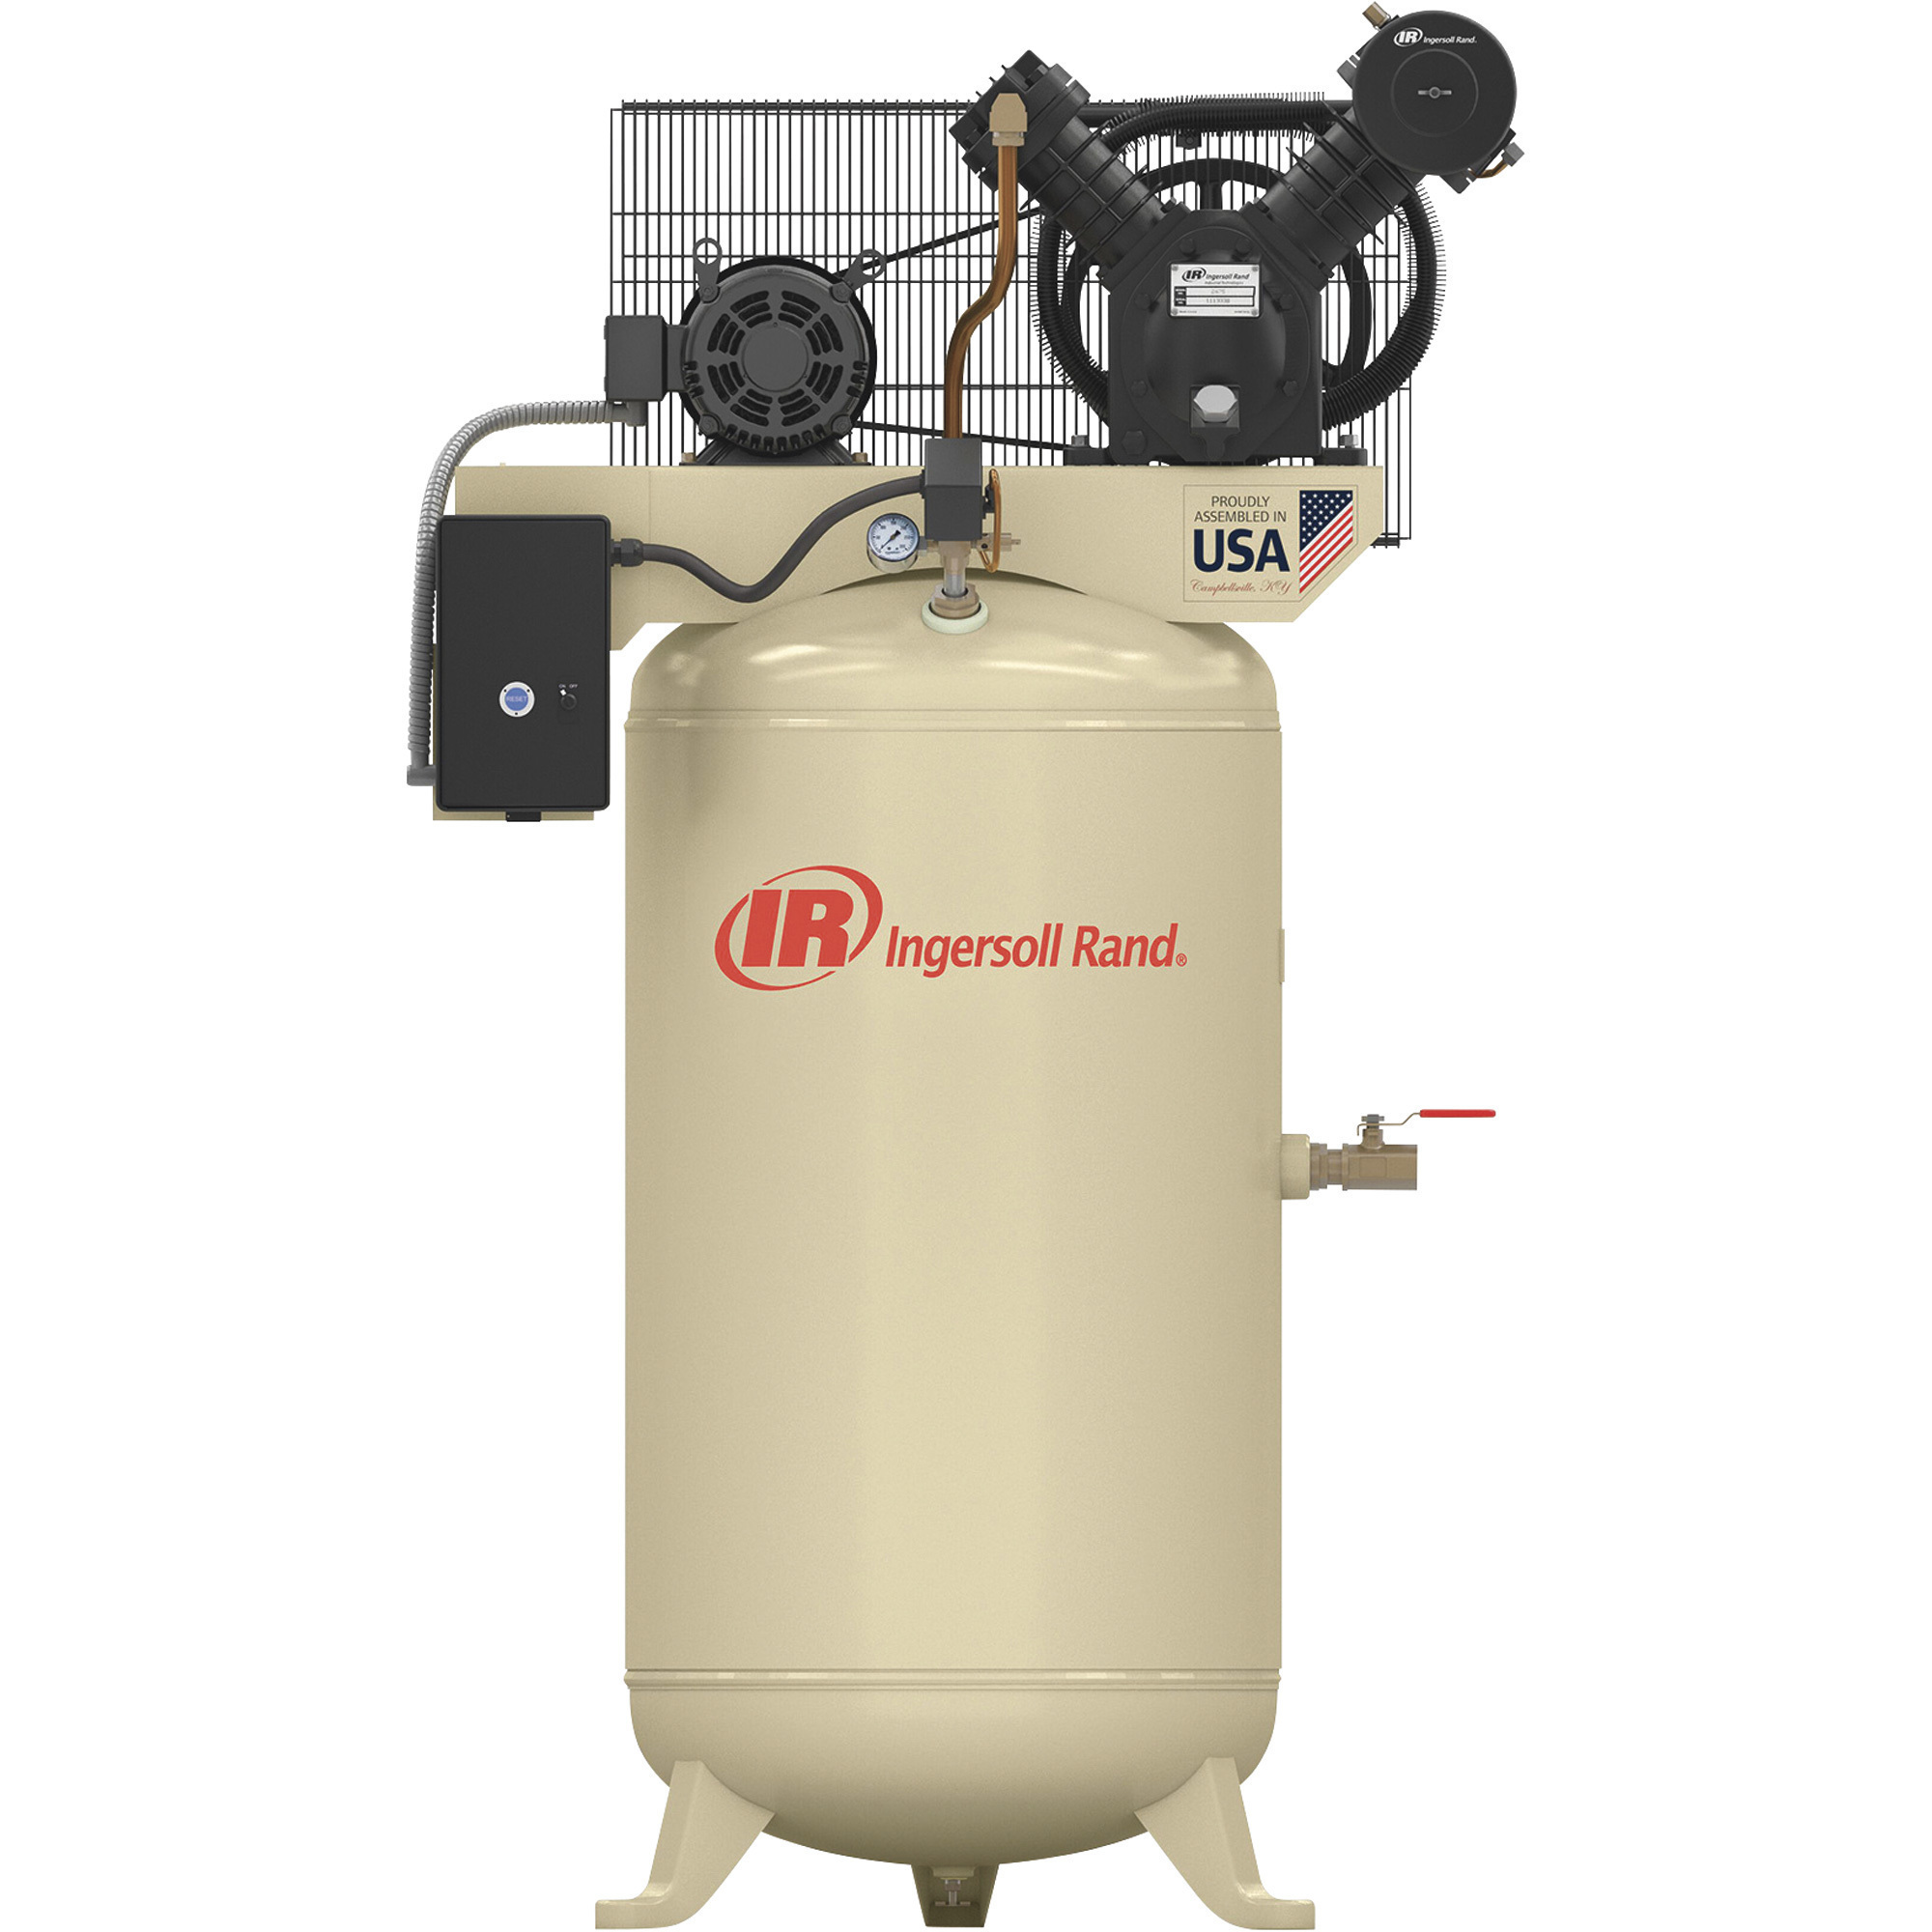 Ingersoll Rand Type-30 Reciprocating Air Compressor, 7.5 HP, 200 Volt, 3 Phase, 80 Gallon Vertical, Model 2475N7.5-V